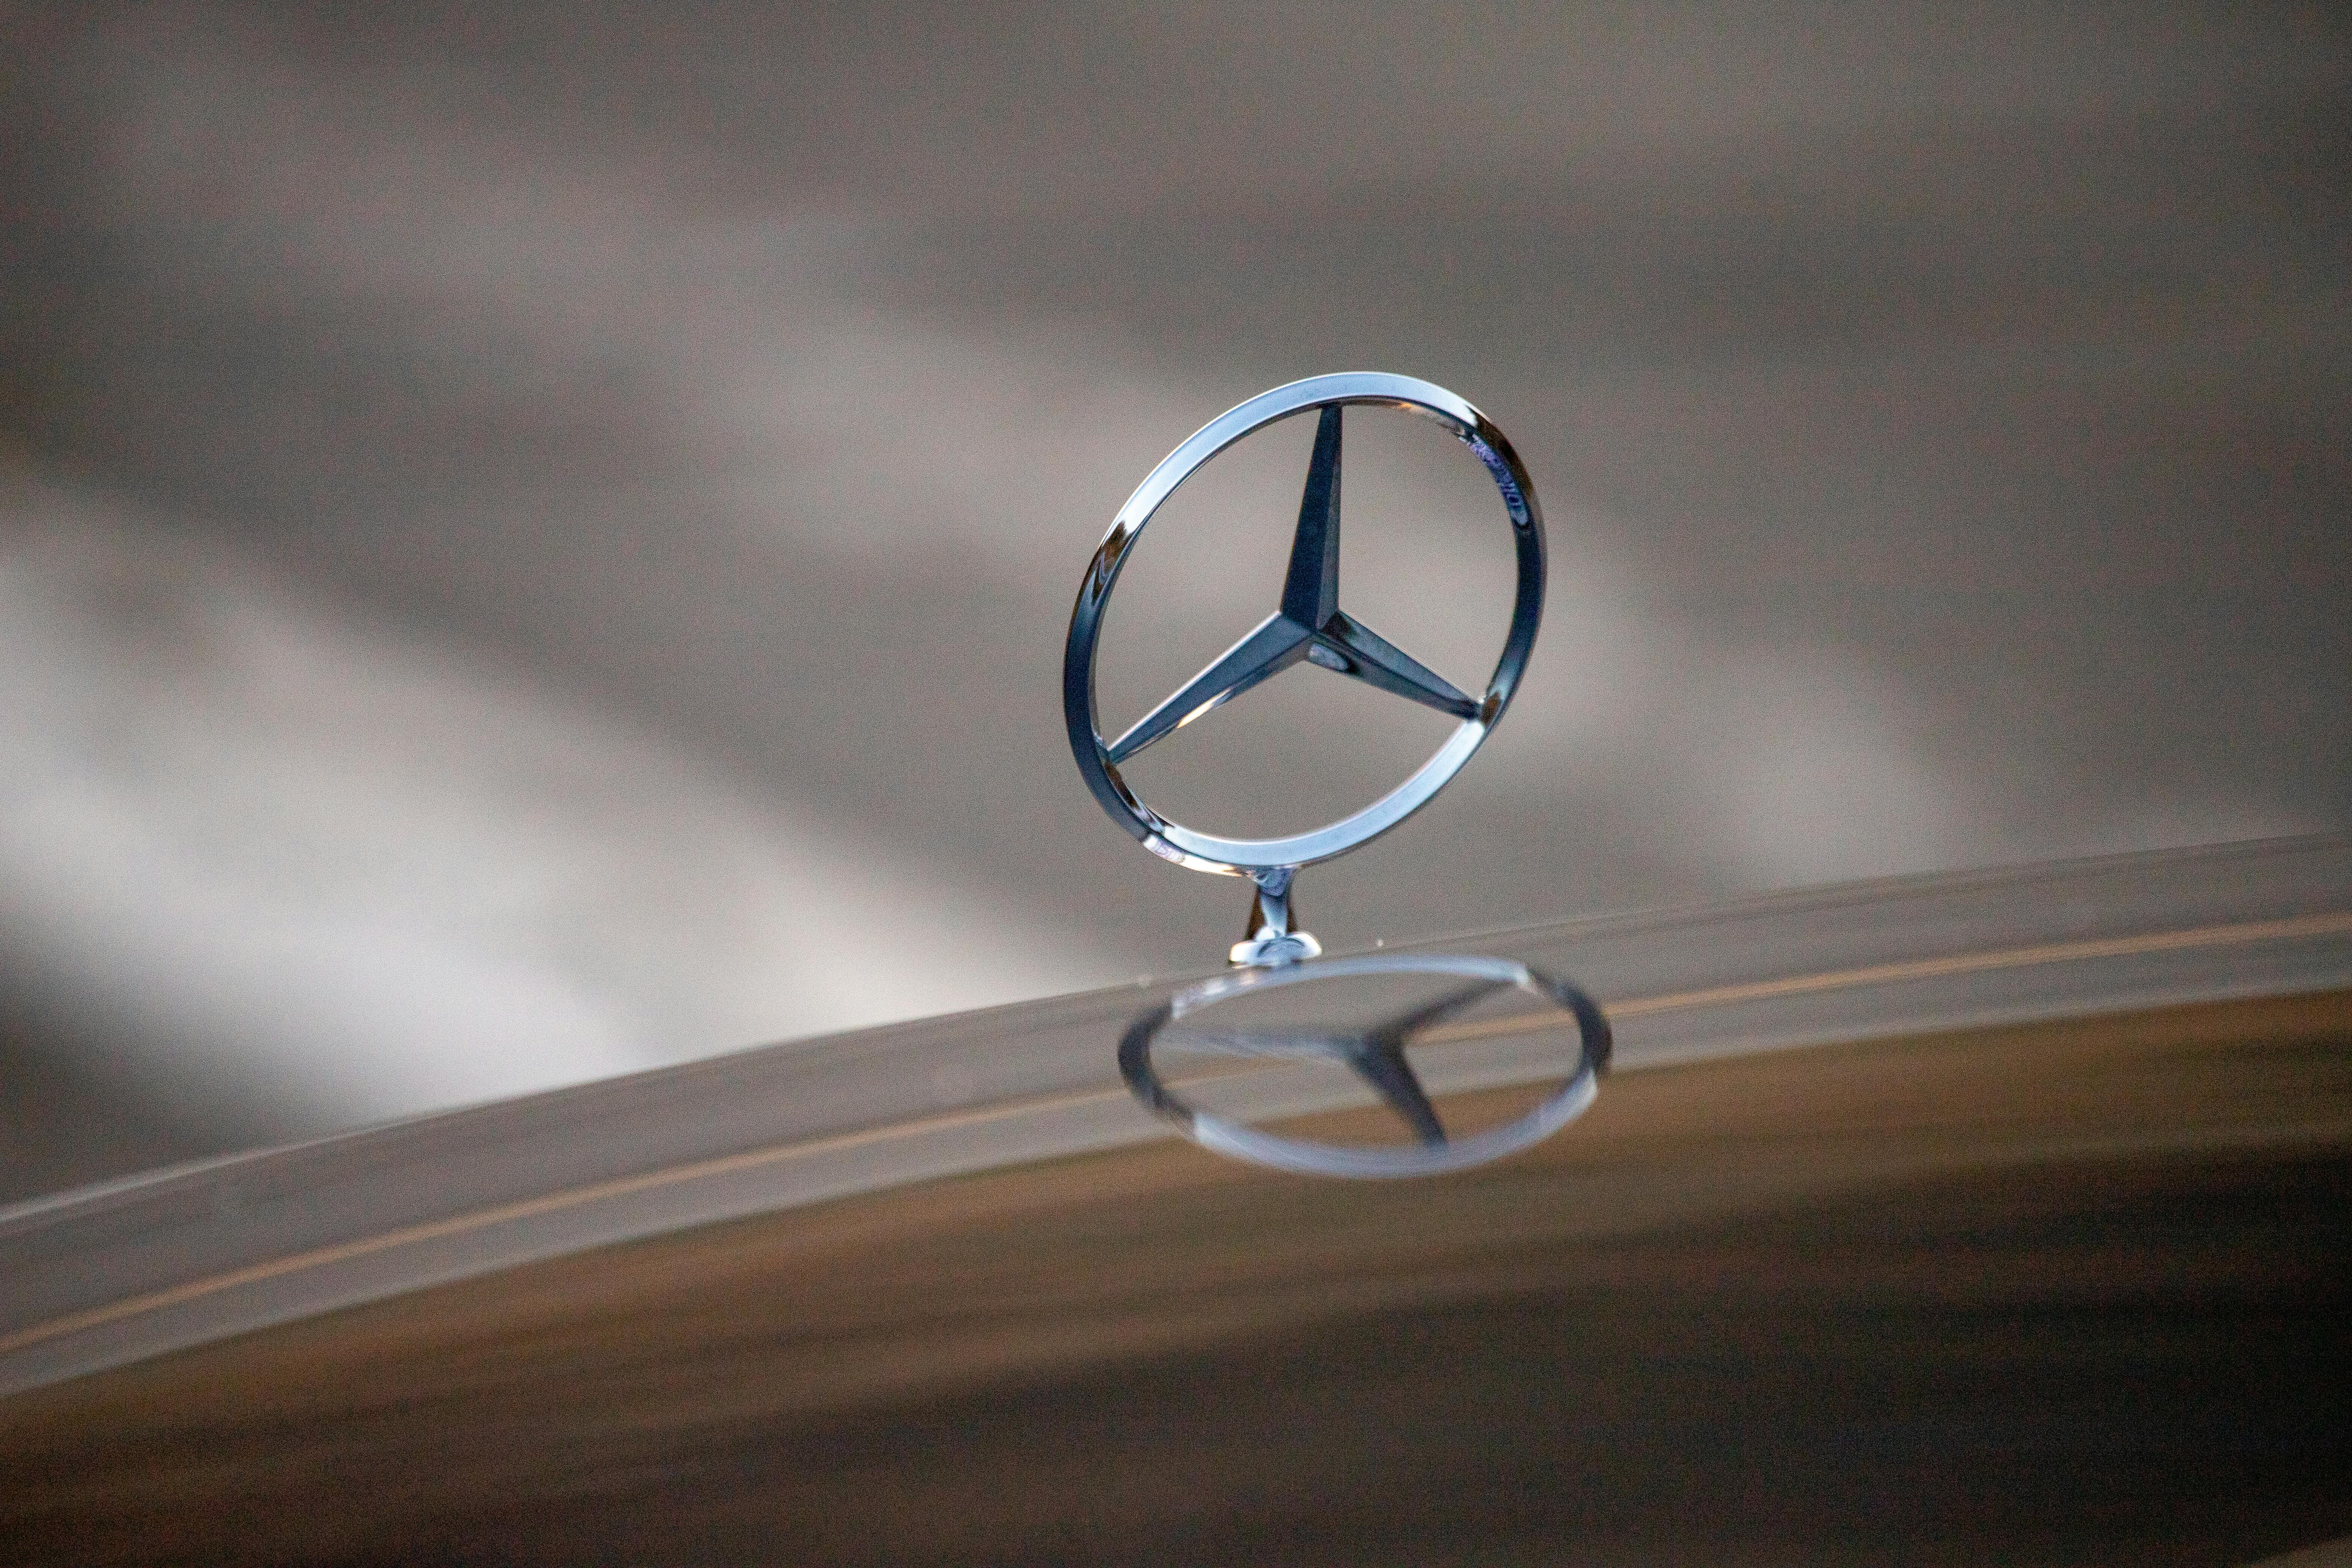 45,628+ Mercedes Logo Pictures  Download Free Images on Unsplash